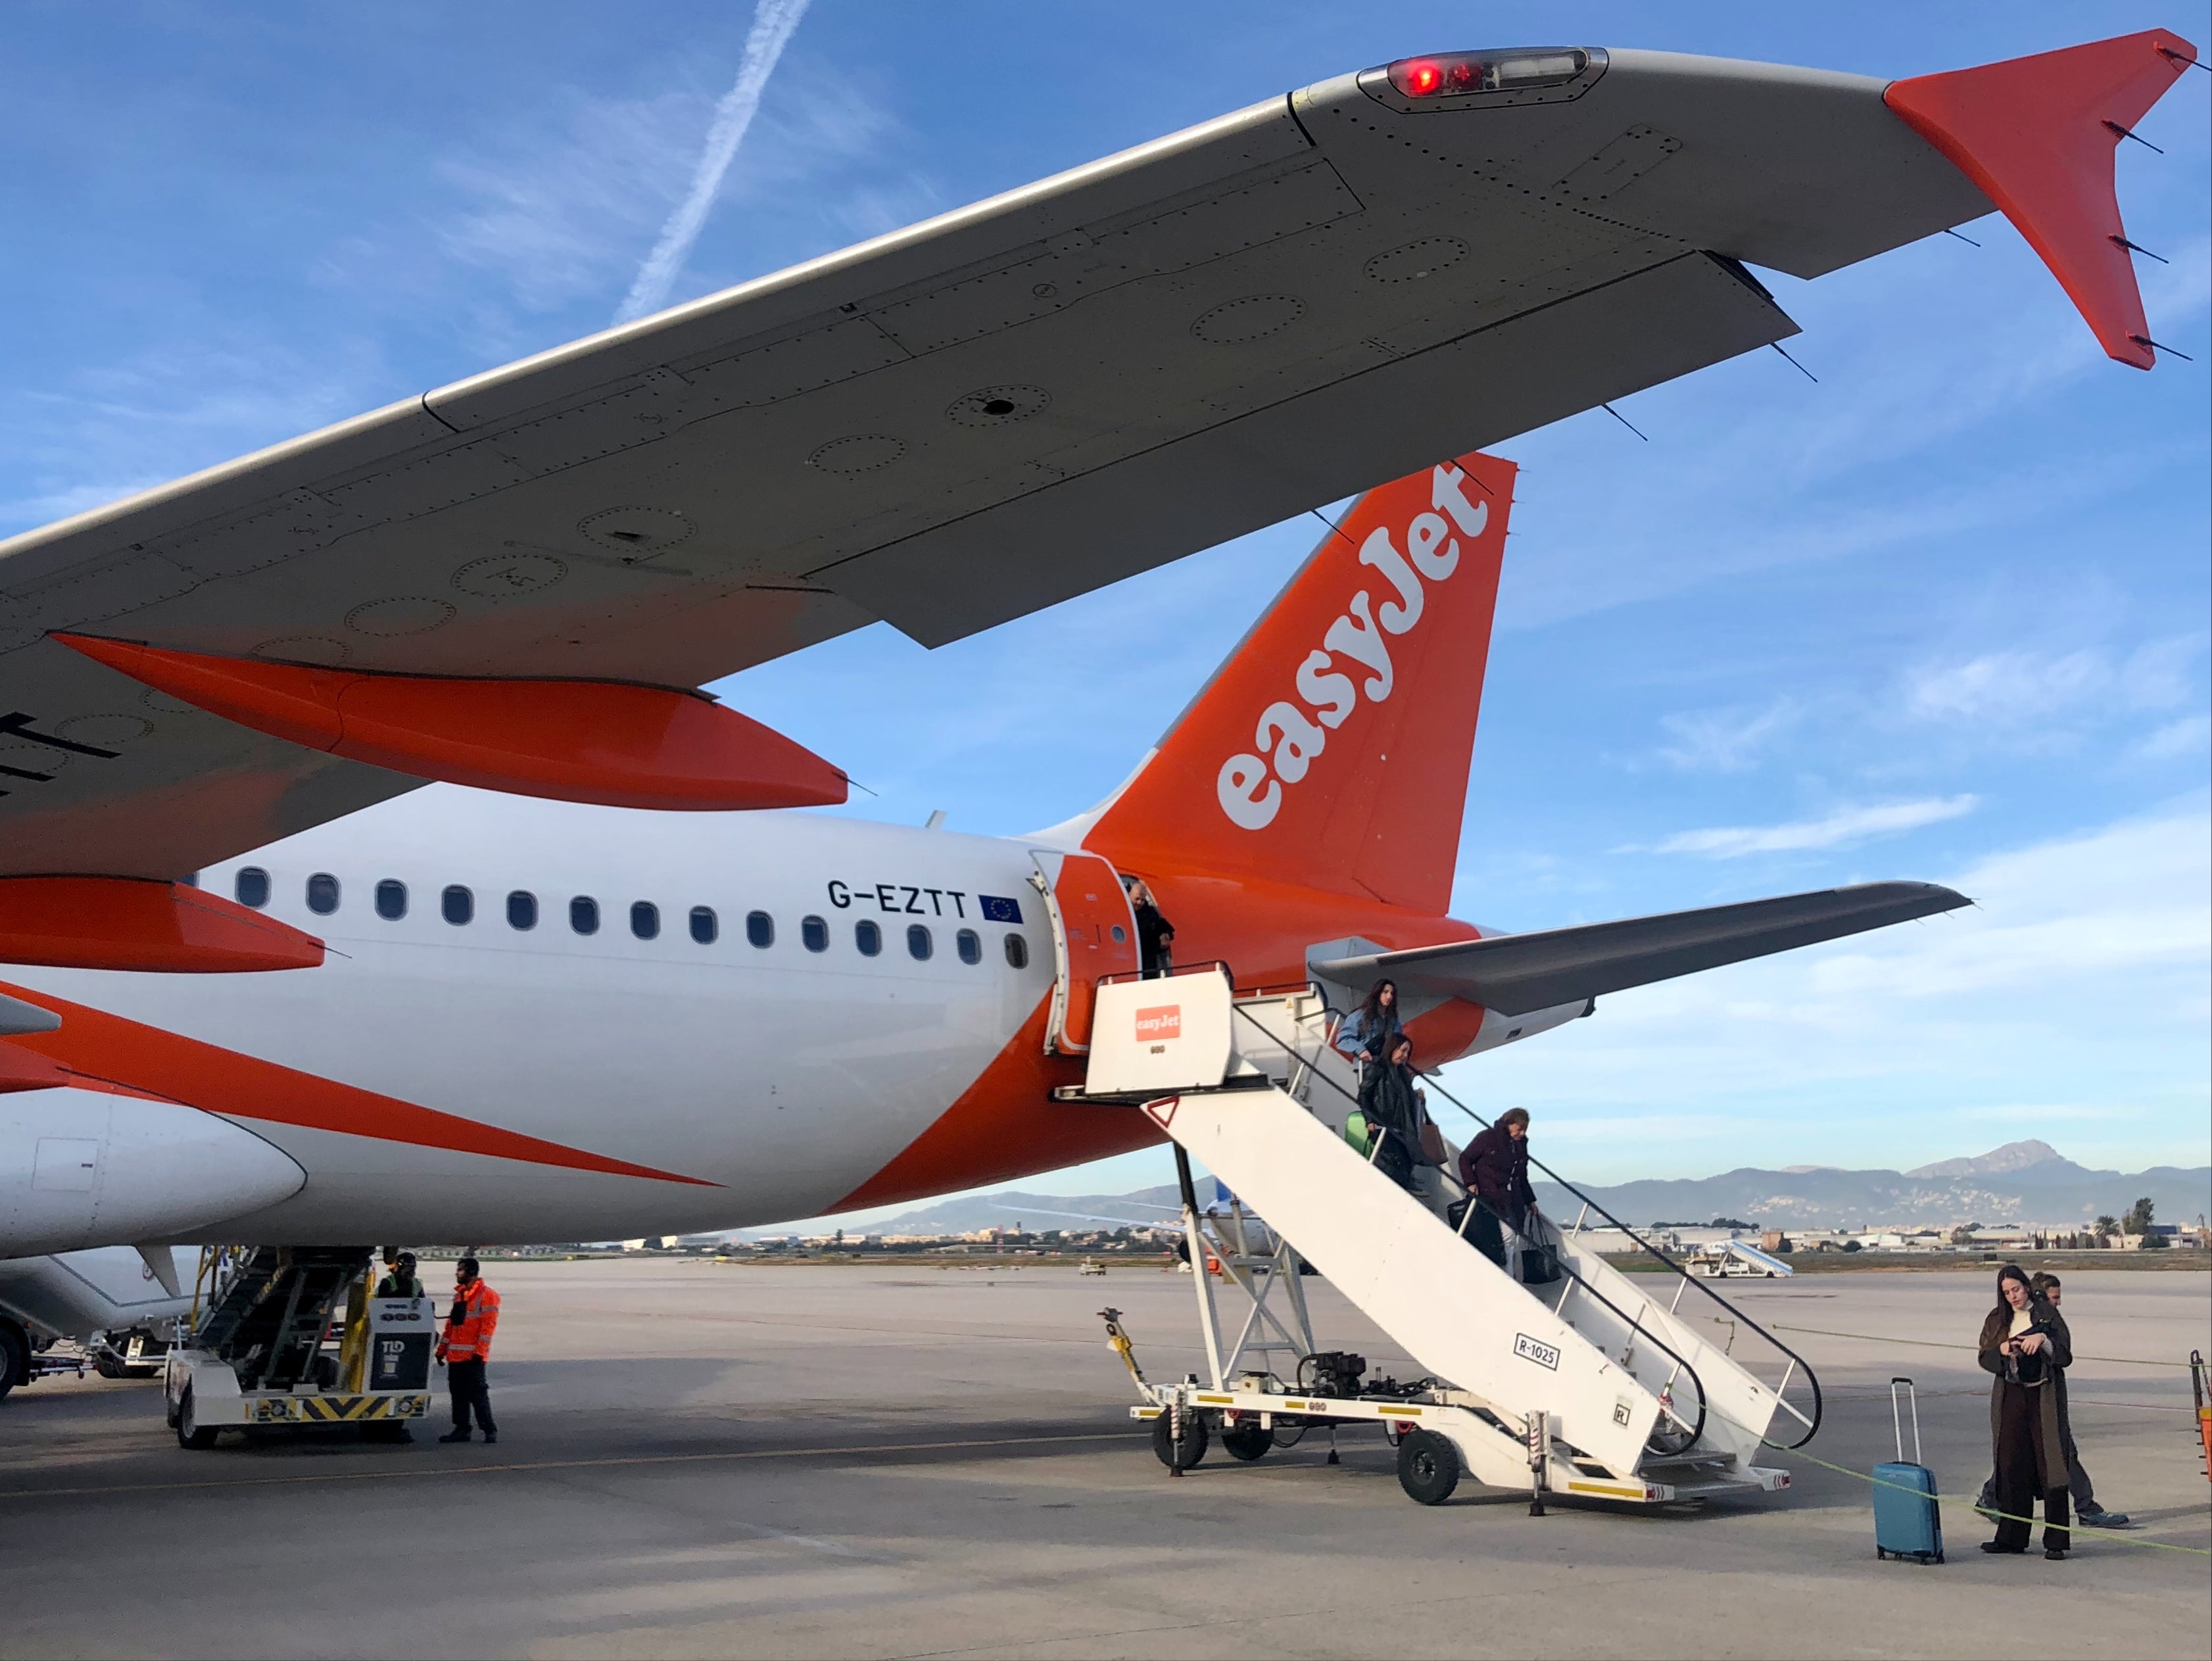 Case study: easyJet aircraft at Palma airport, passenger Richard Knight’s destination